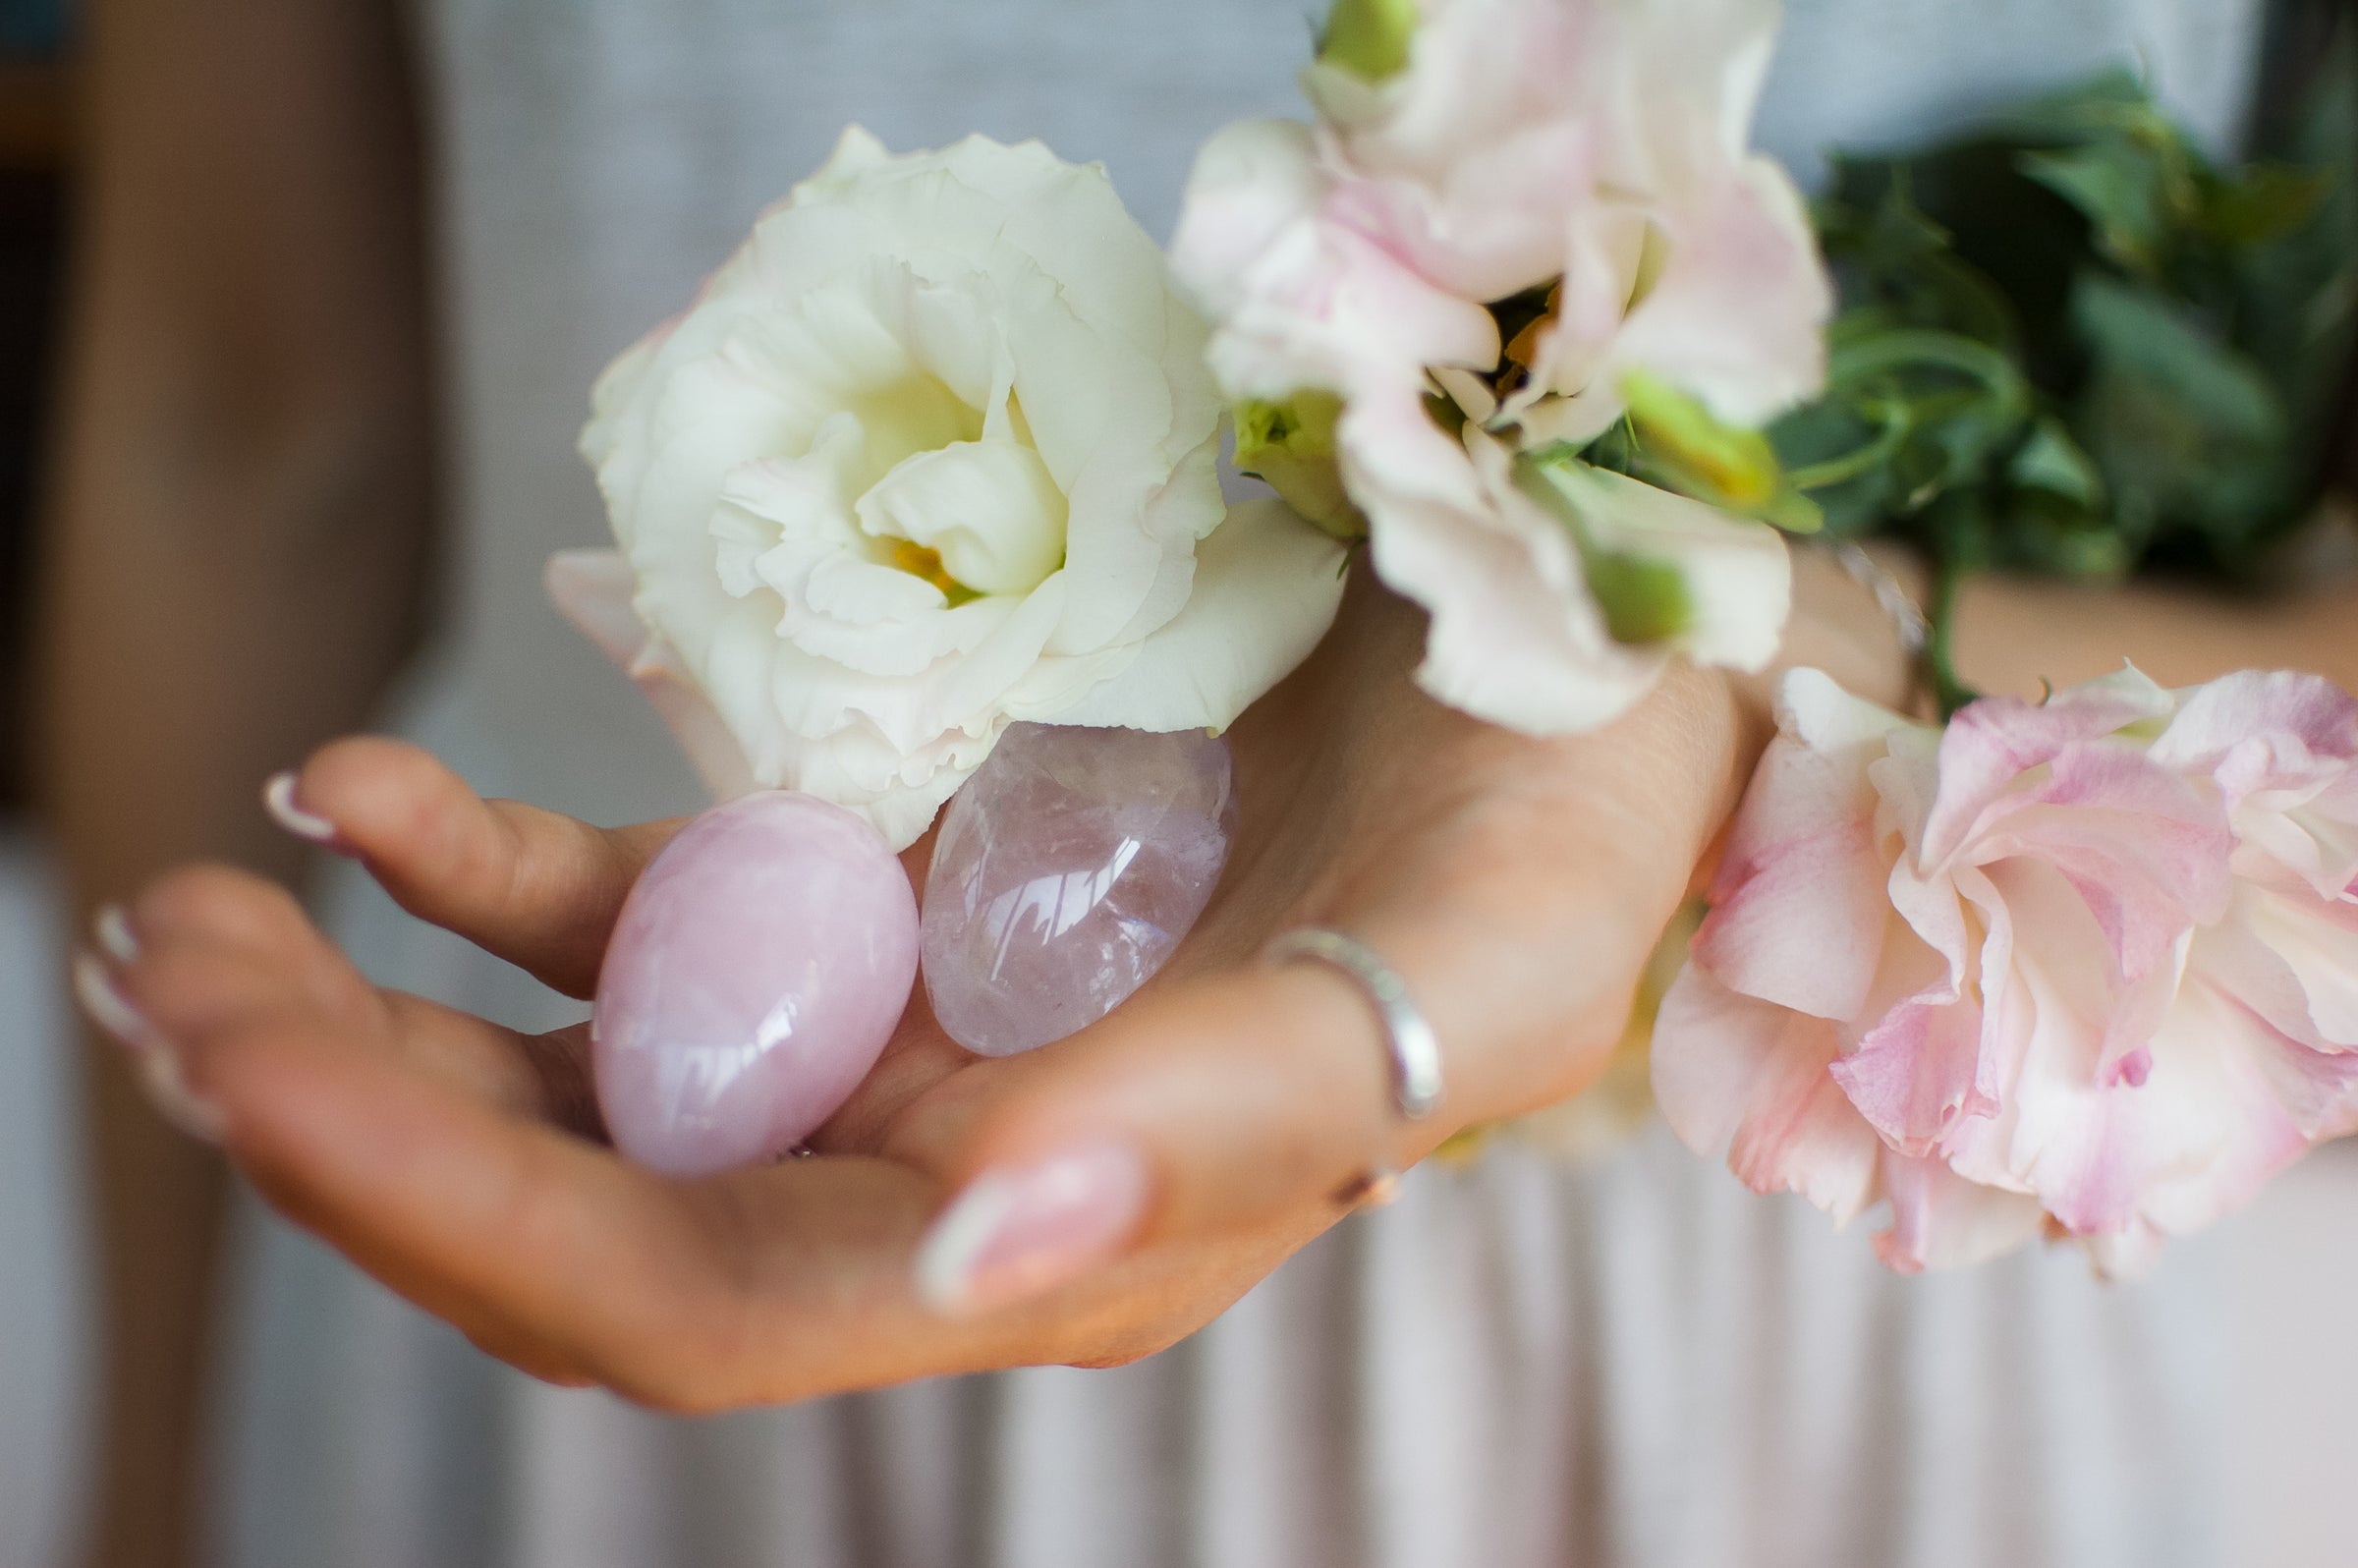 Woman holding small rose quartz yoni eggs 